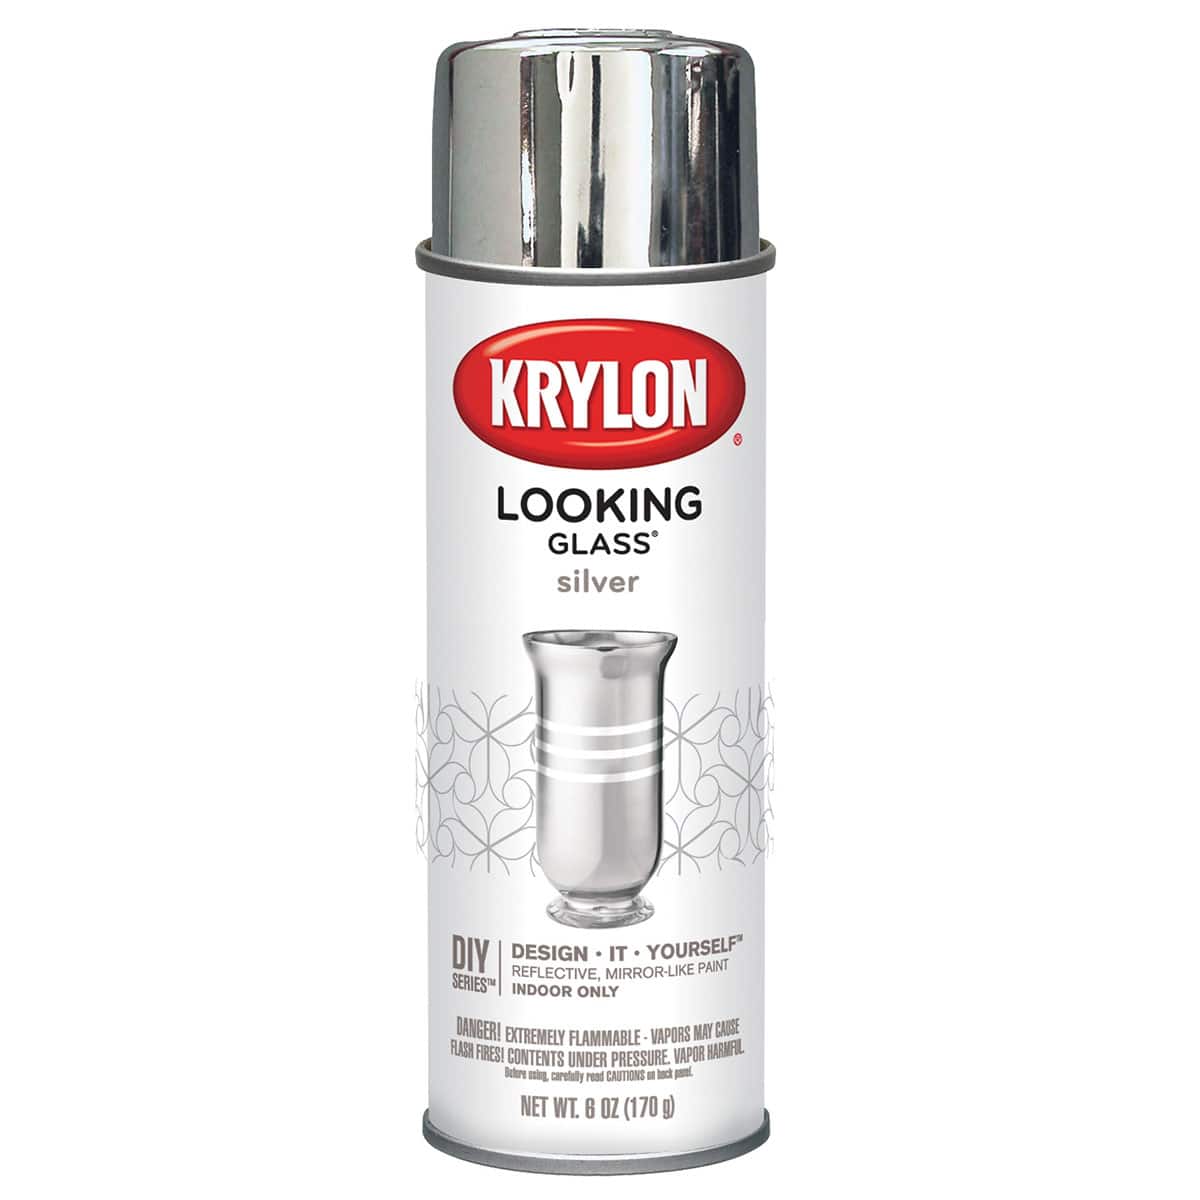 Krylon Looking Glass Silver-Like Aerosol Spray Paint 6 Oz.